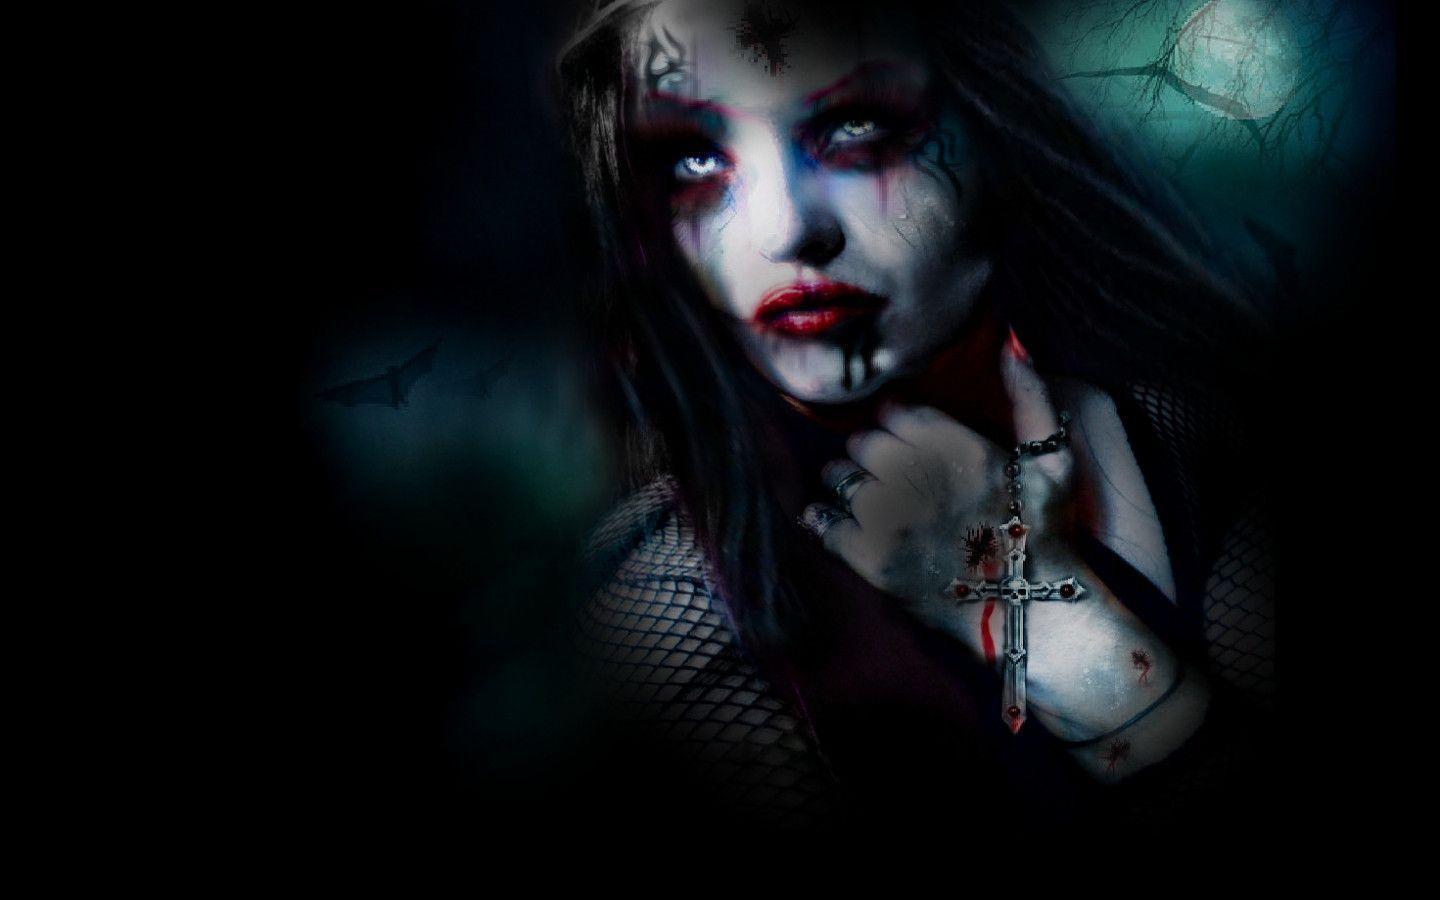 Starrayne dark horror gothic vampire fantasy art face blood